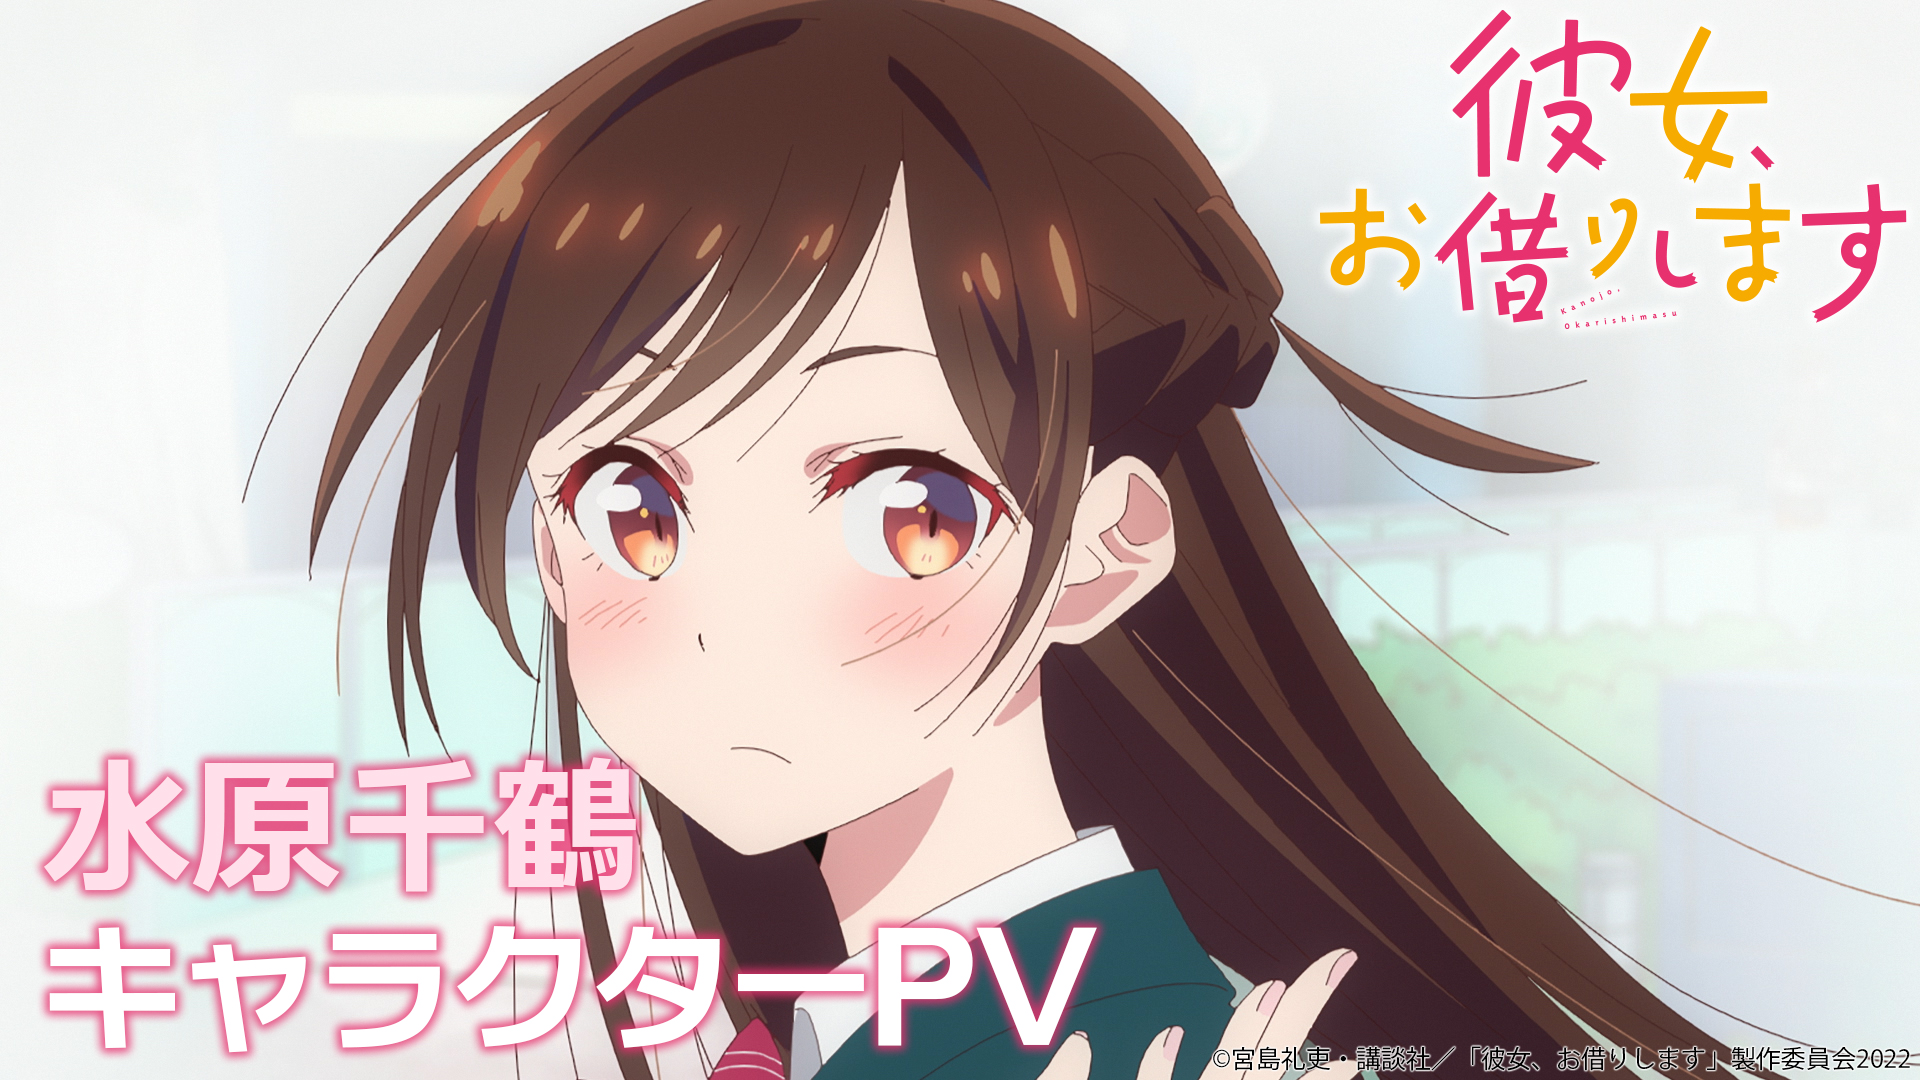 RentAGirlfriend Animes Character Video Highlights Chizuru  News  Anime  News Network